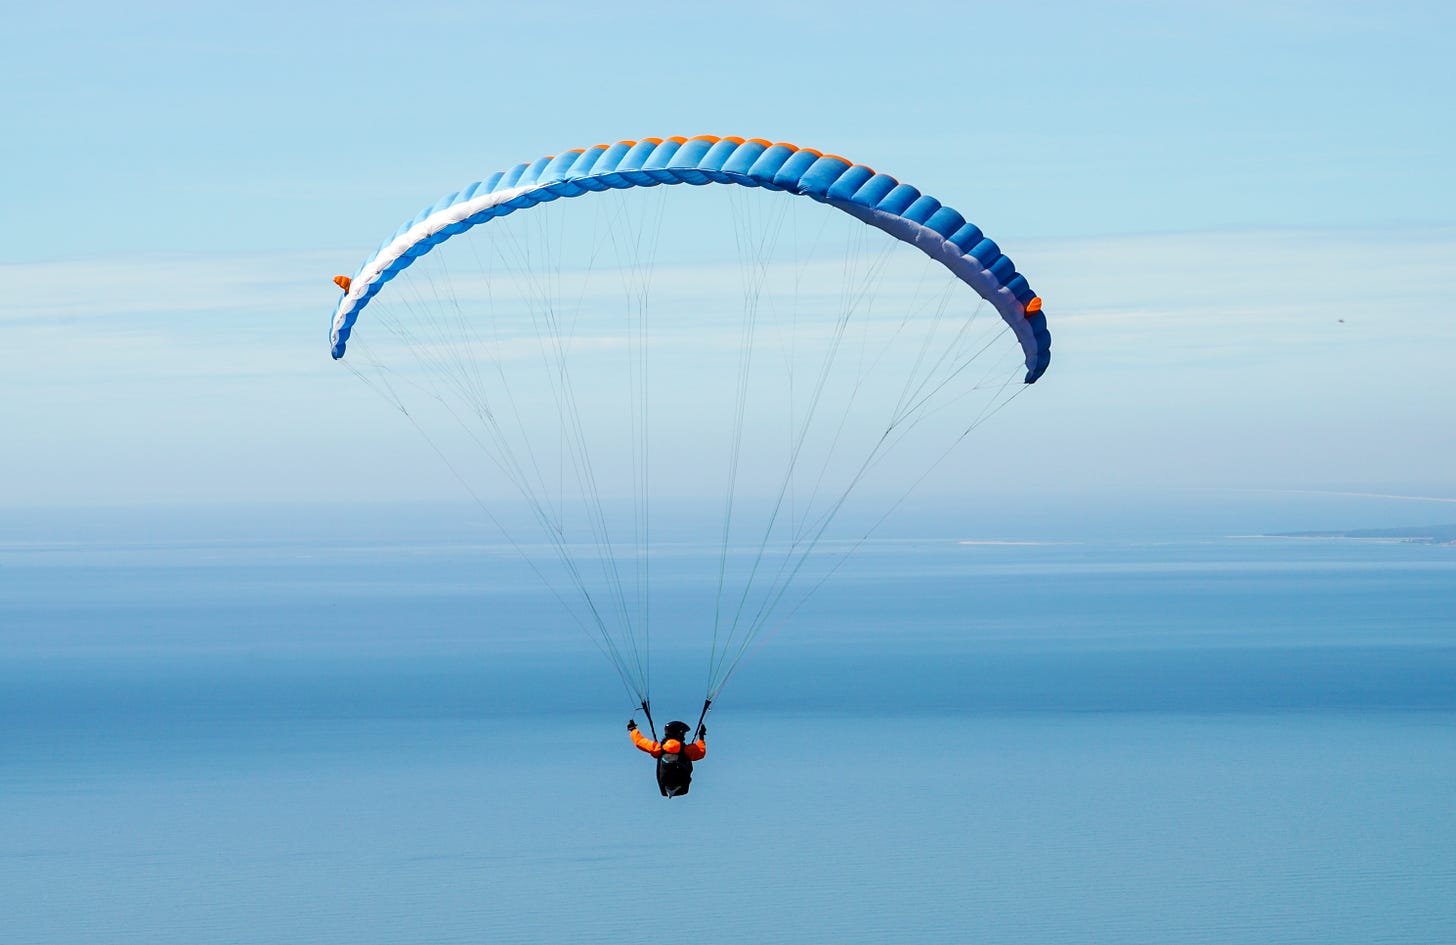 A person parachuting